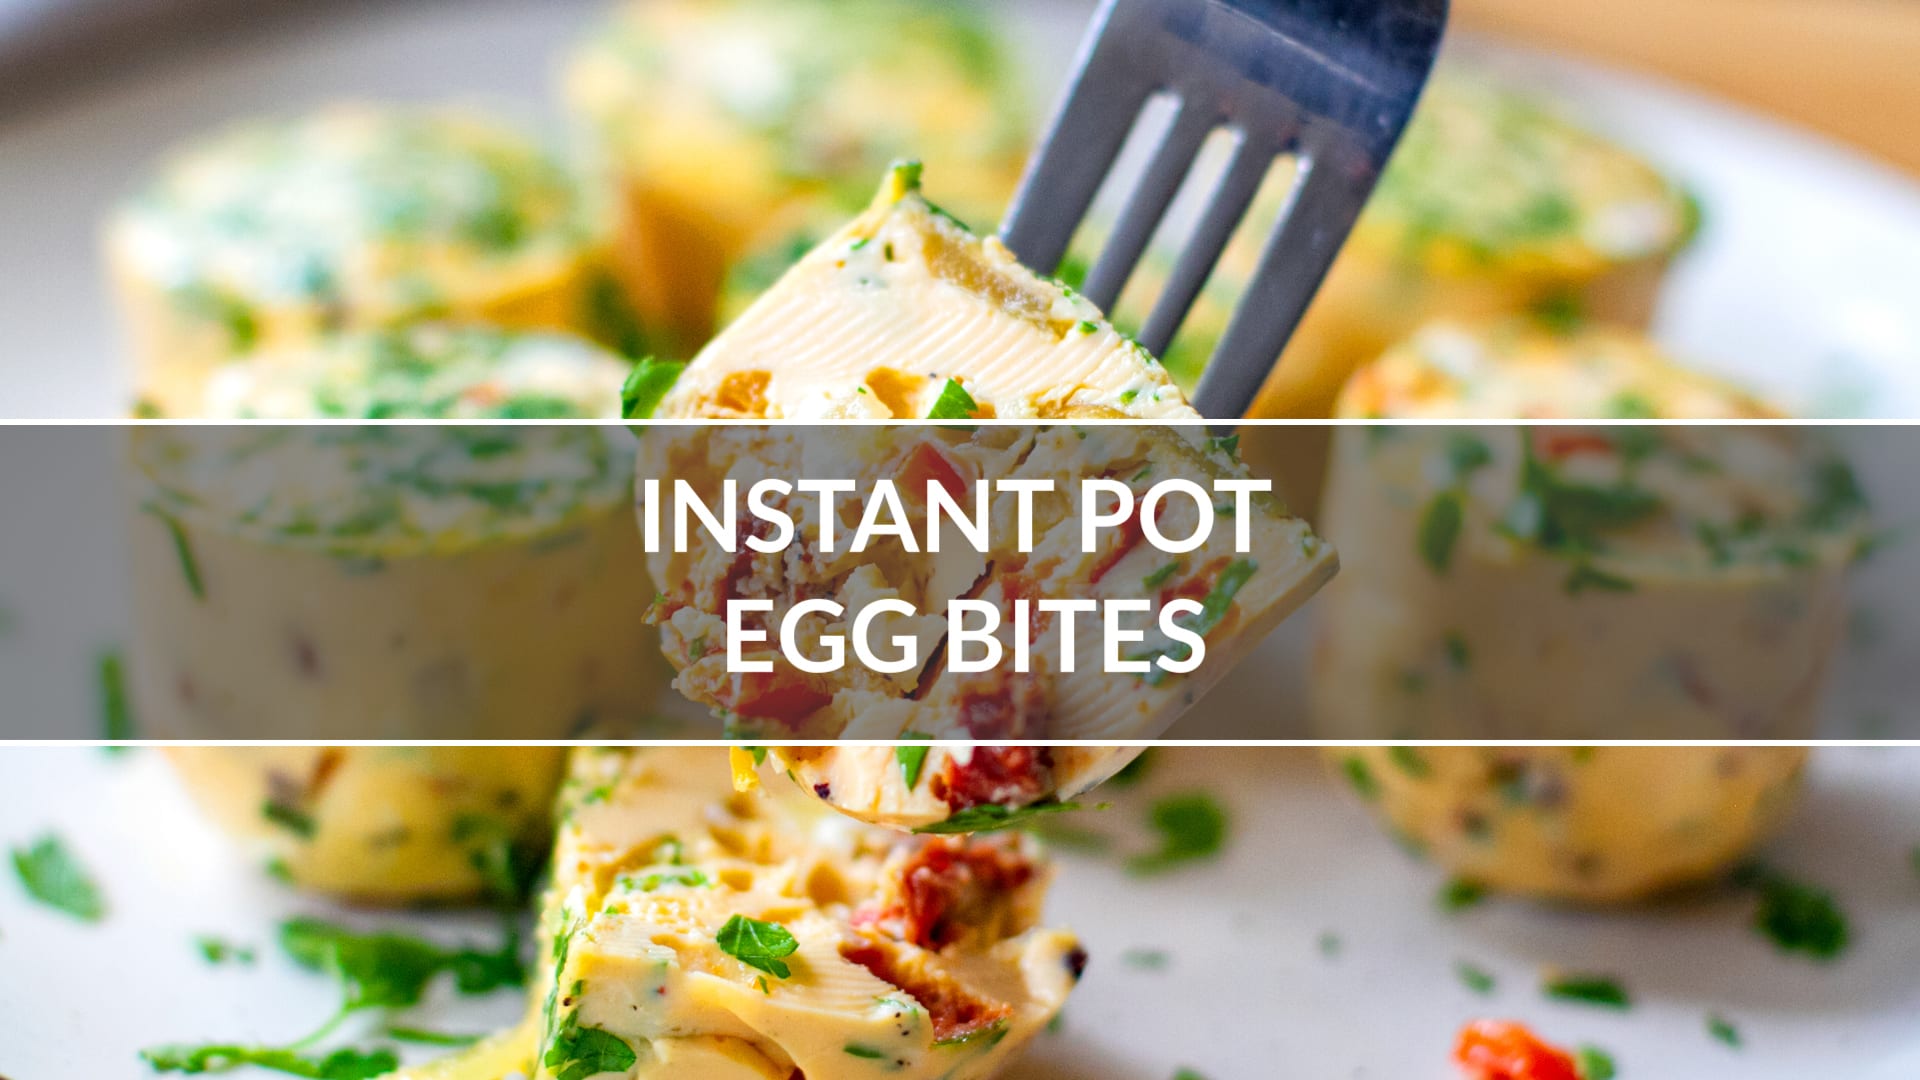 Mediterranean Egg Bites In Instant Pot With Herbs & Feta (VIDEO)